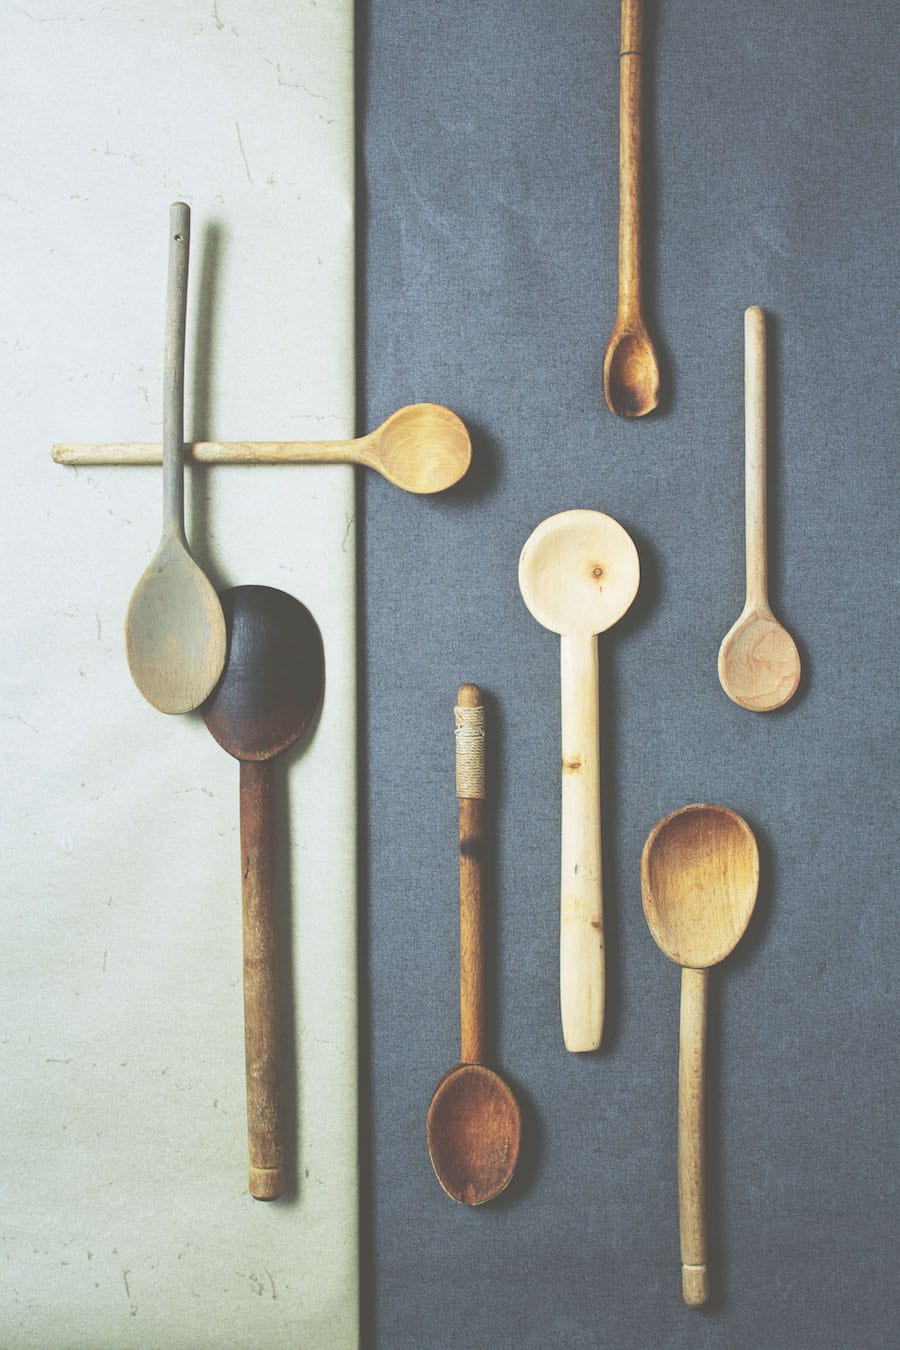 Gli strumenti della cucina moderna - Tim Haywar - Guido Tommasi 